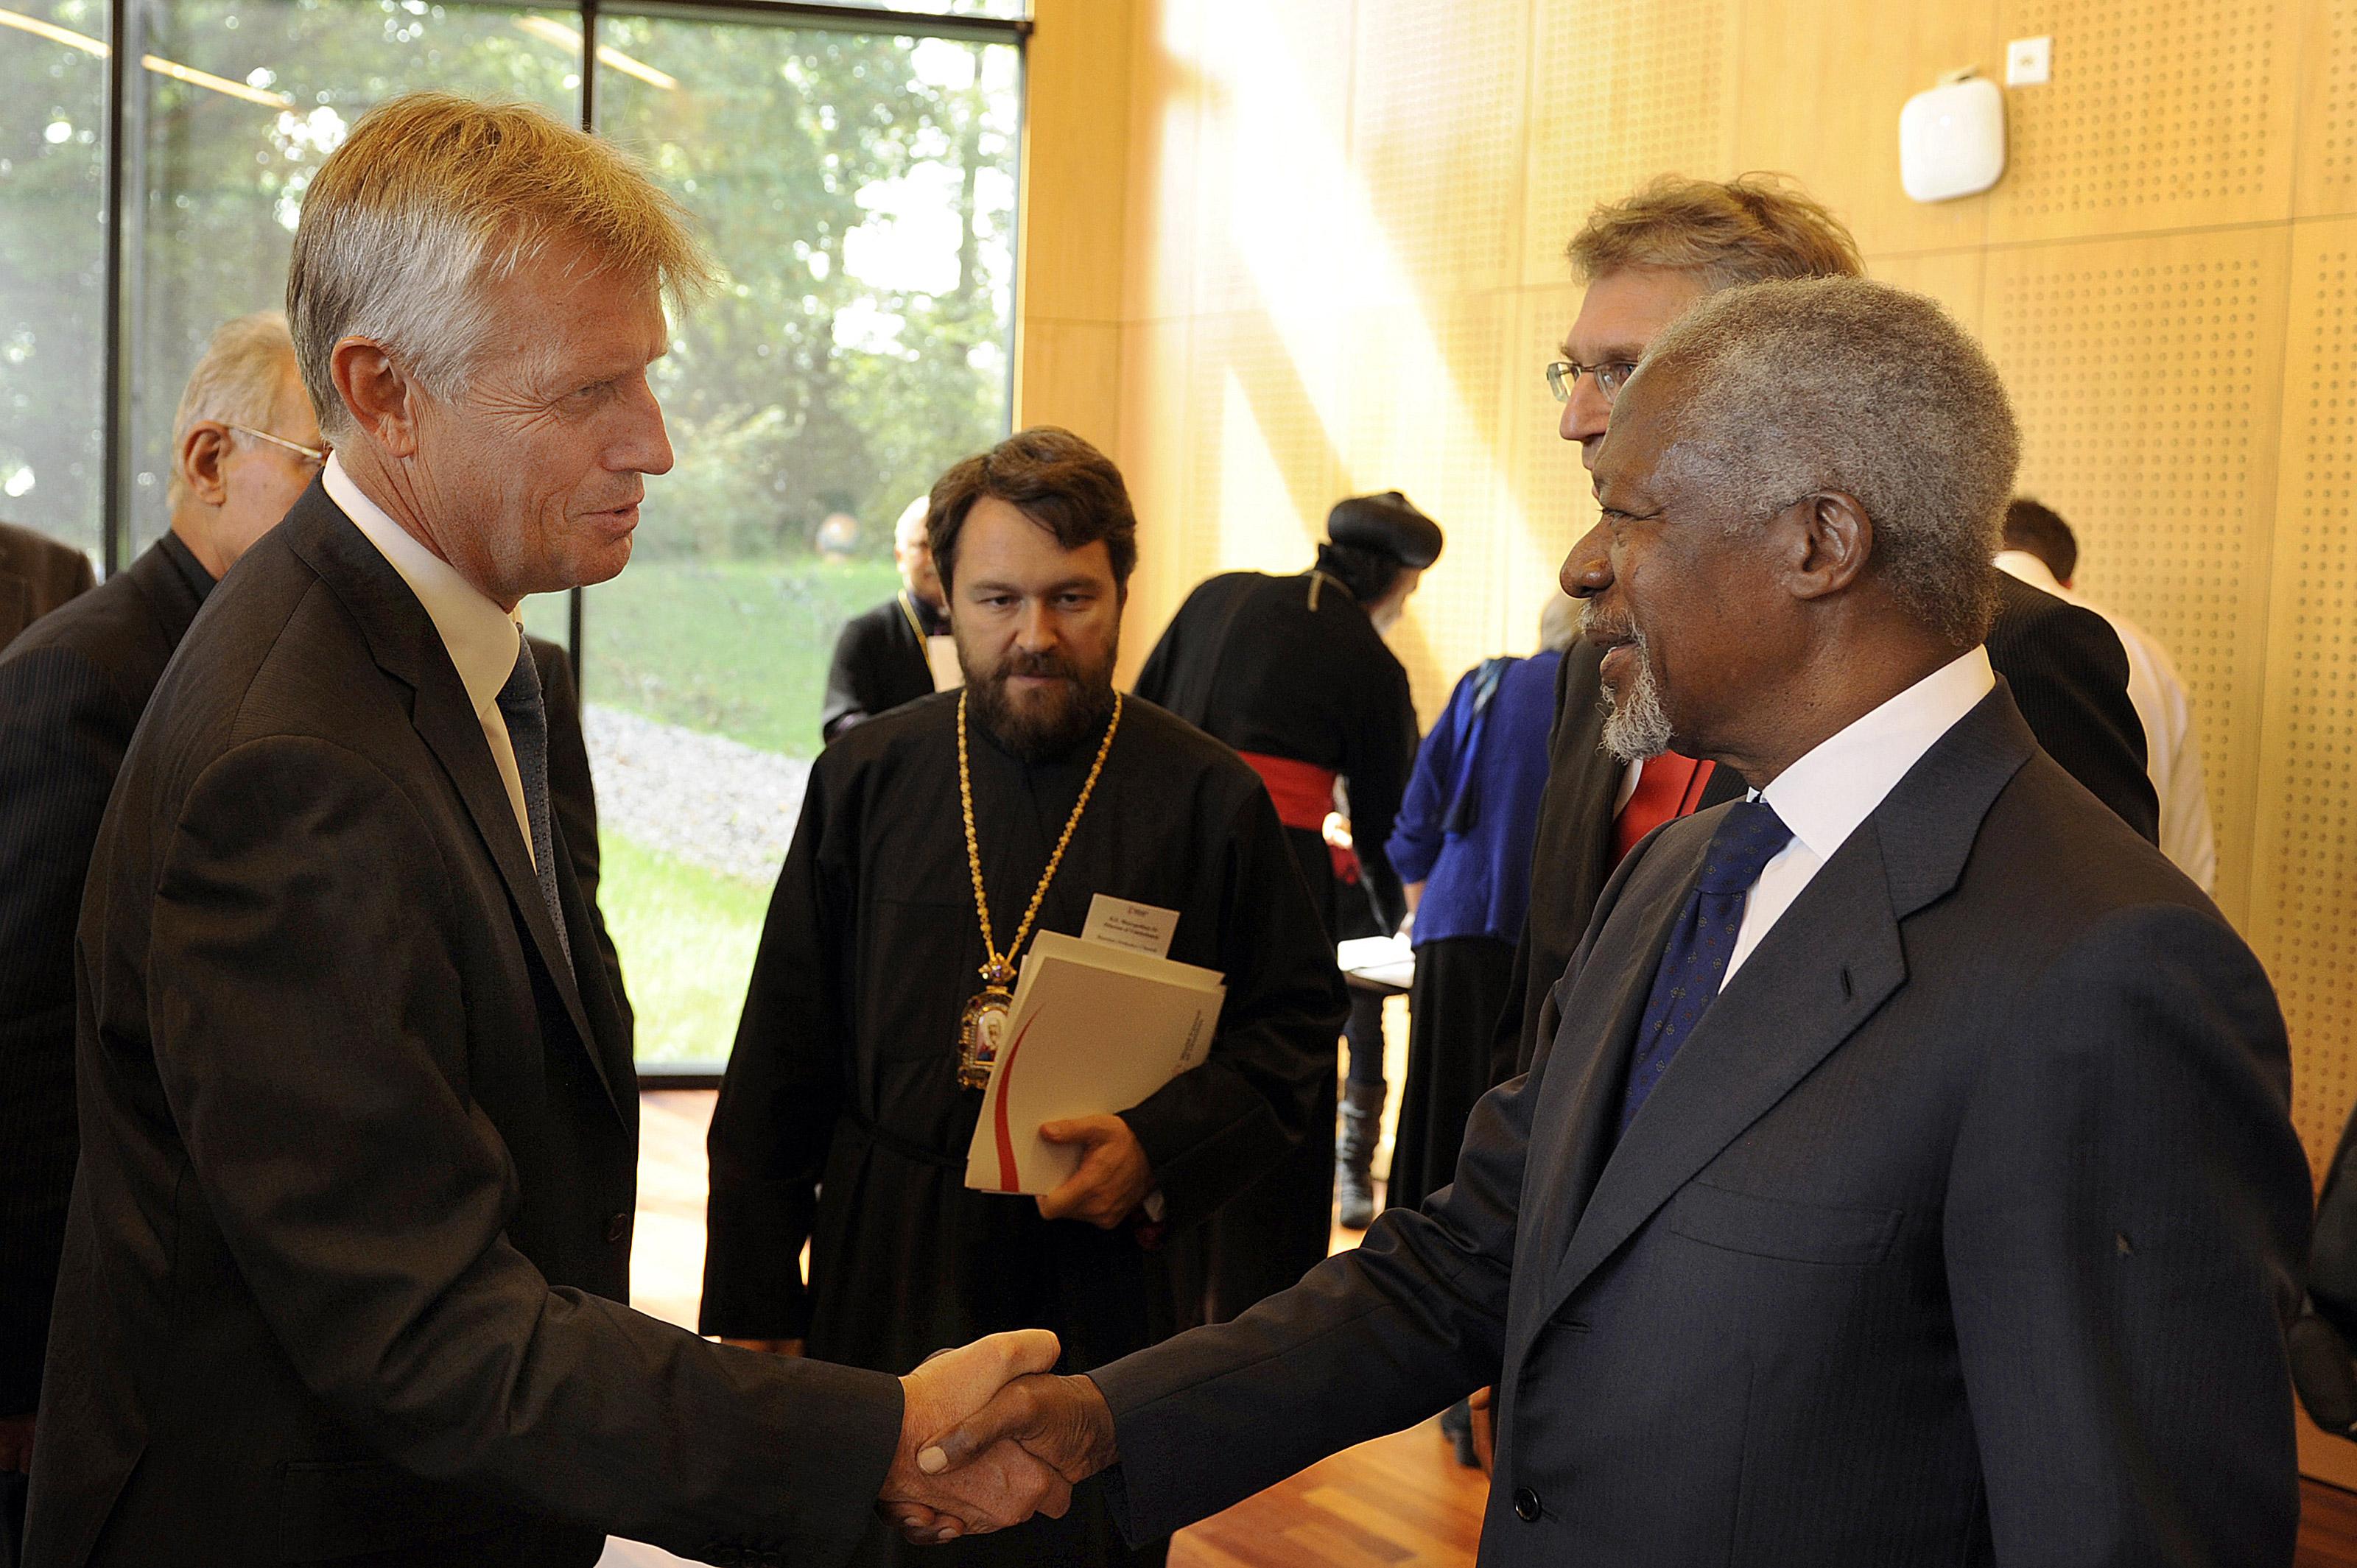 Kofi Annan greets Martin Junge at the WCC consultation Â© Peter Williams/WCC